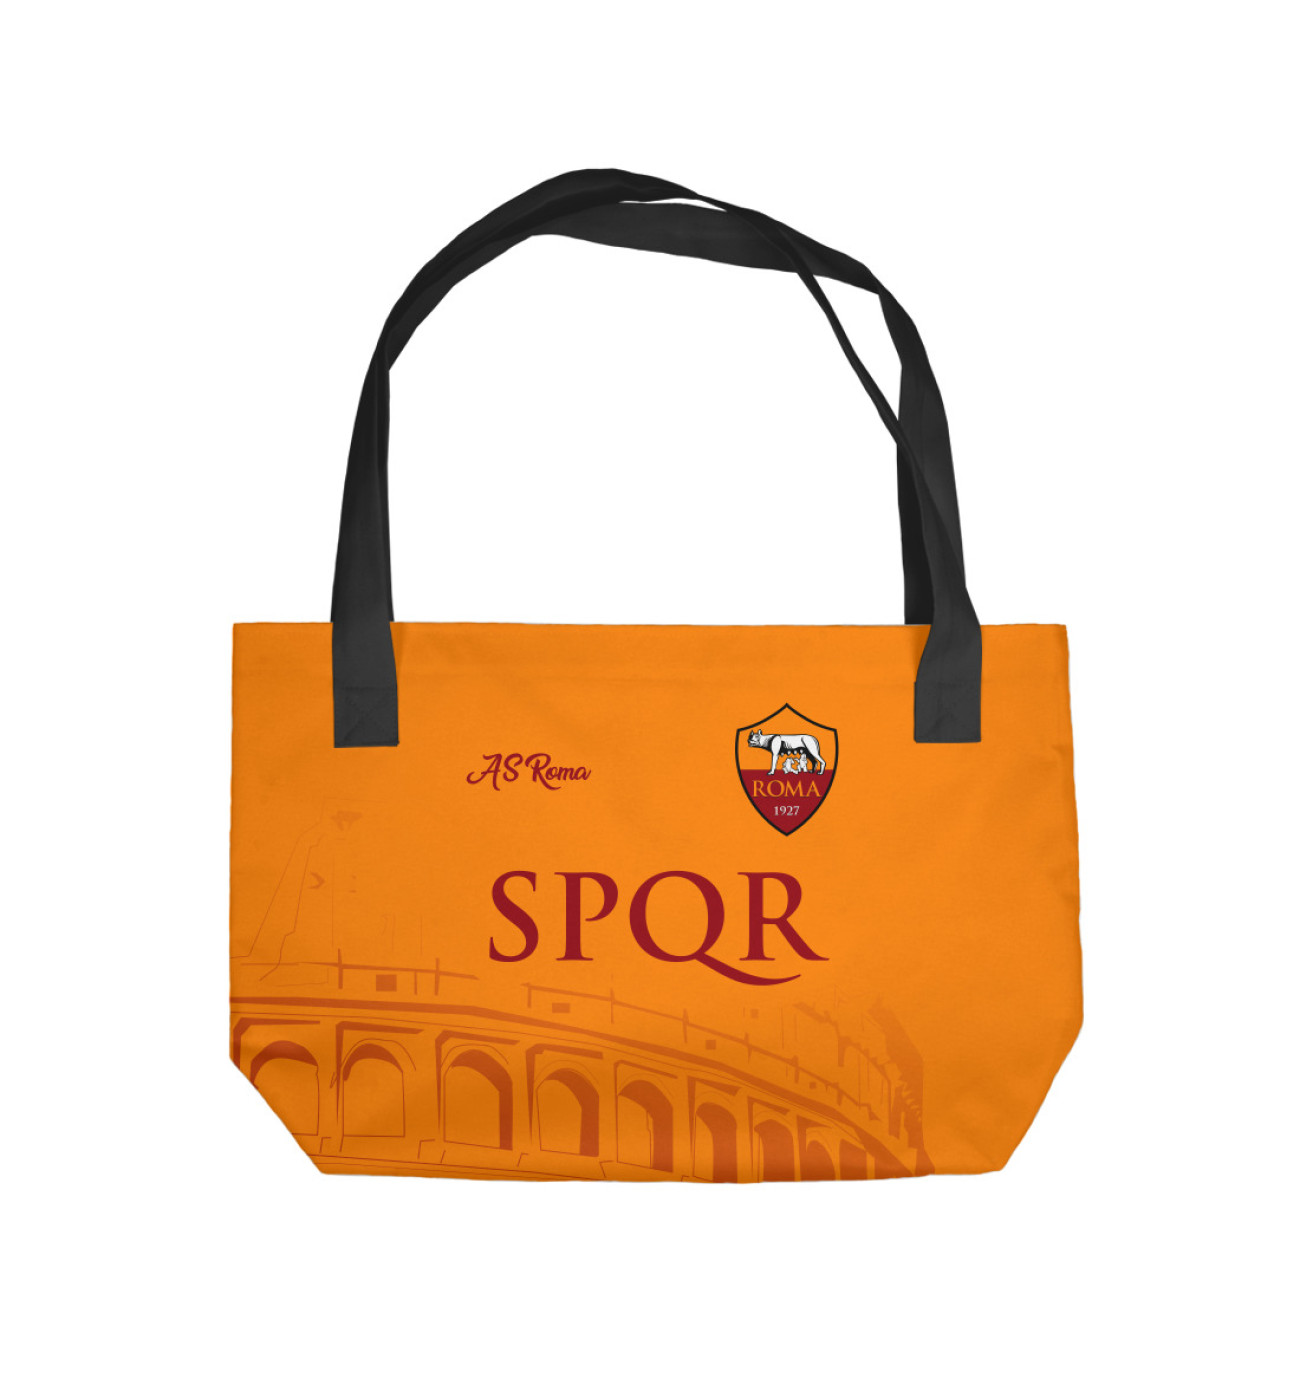  Пляжная сумка Рома, артикул: FTO-144538-sup